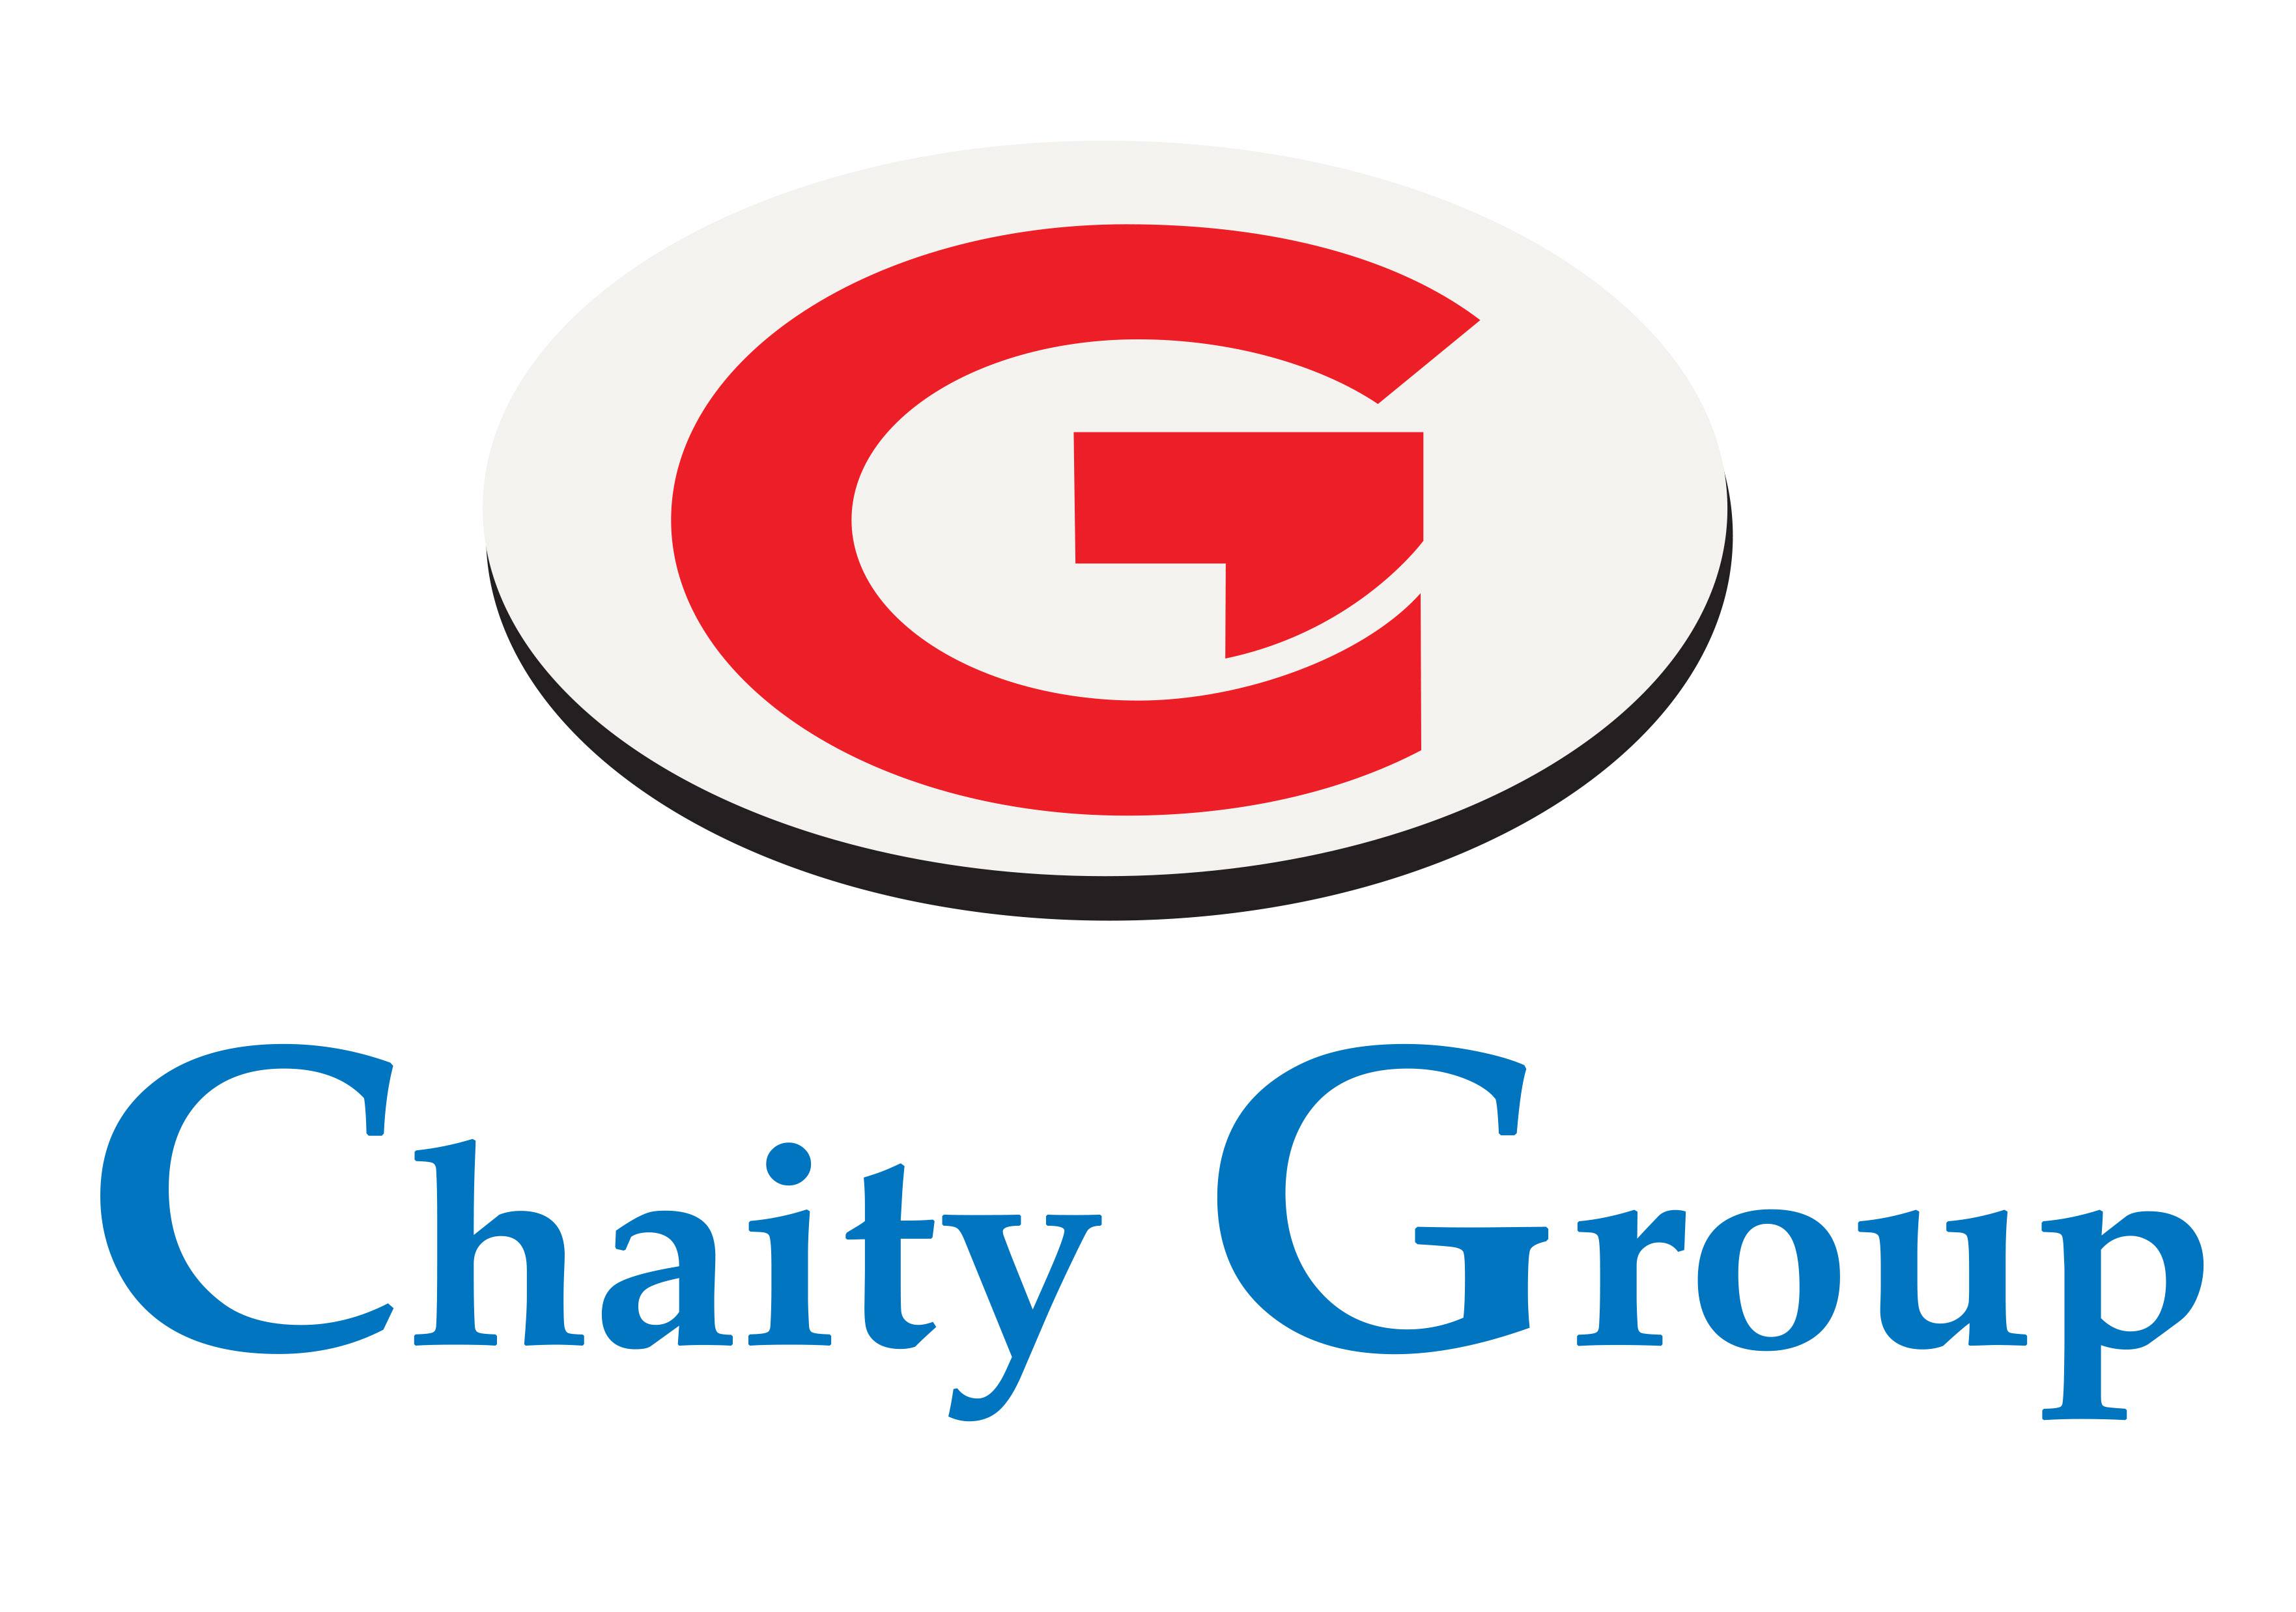 Chaity Group